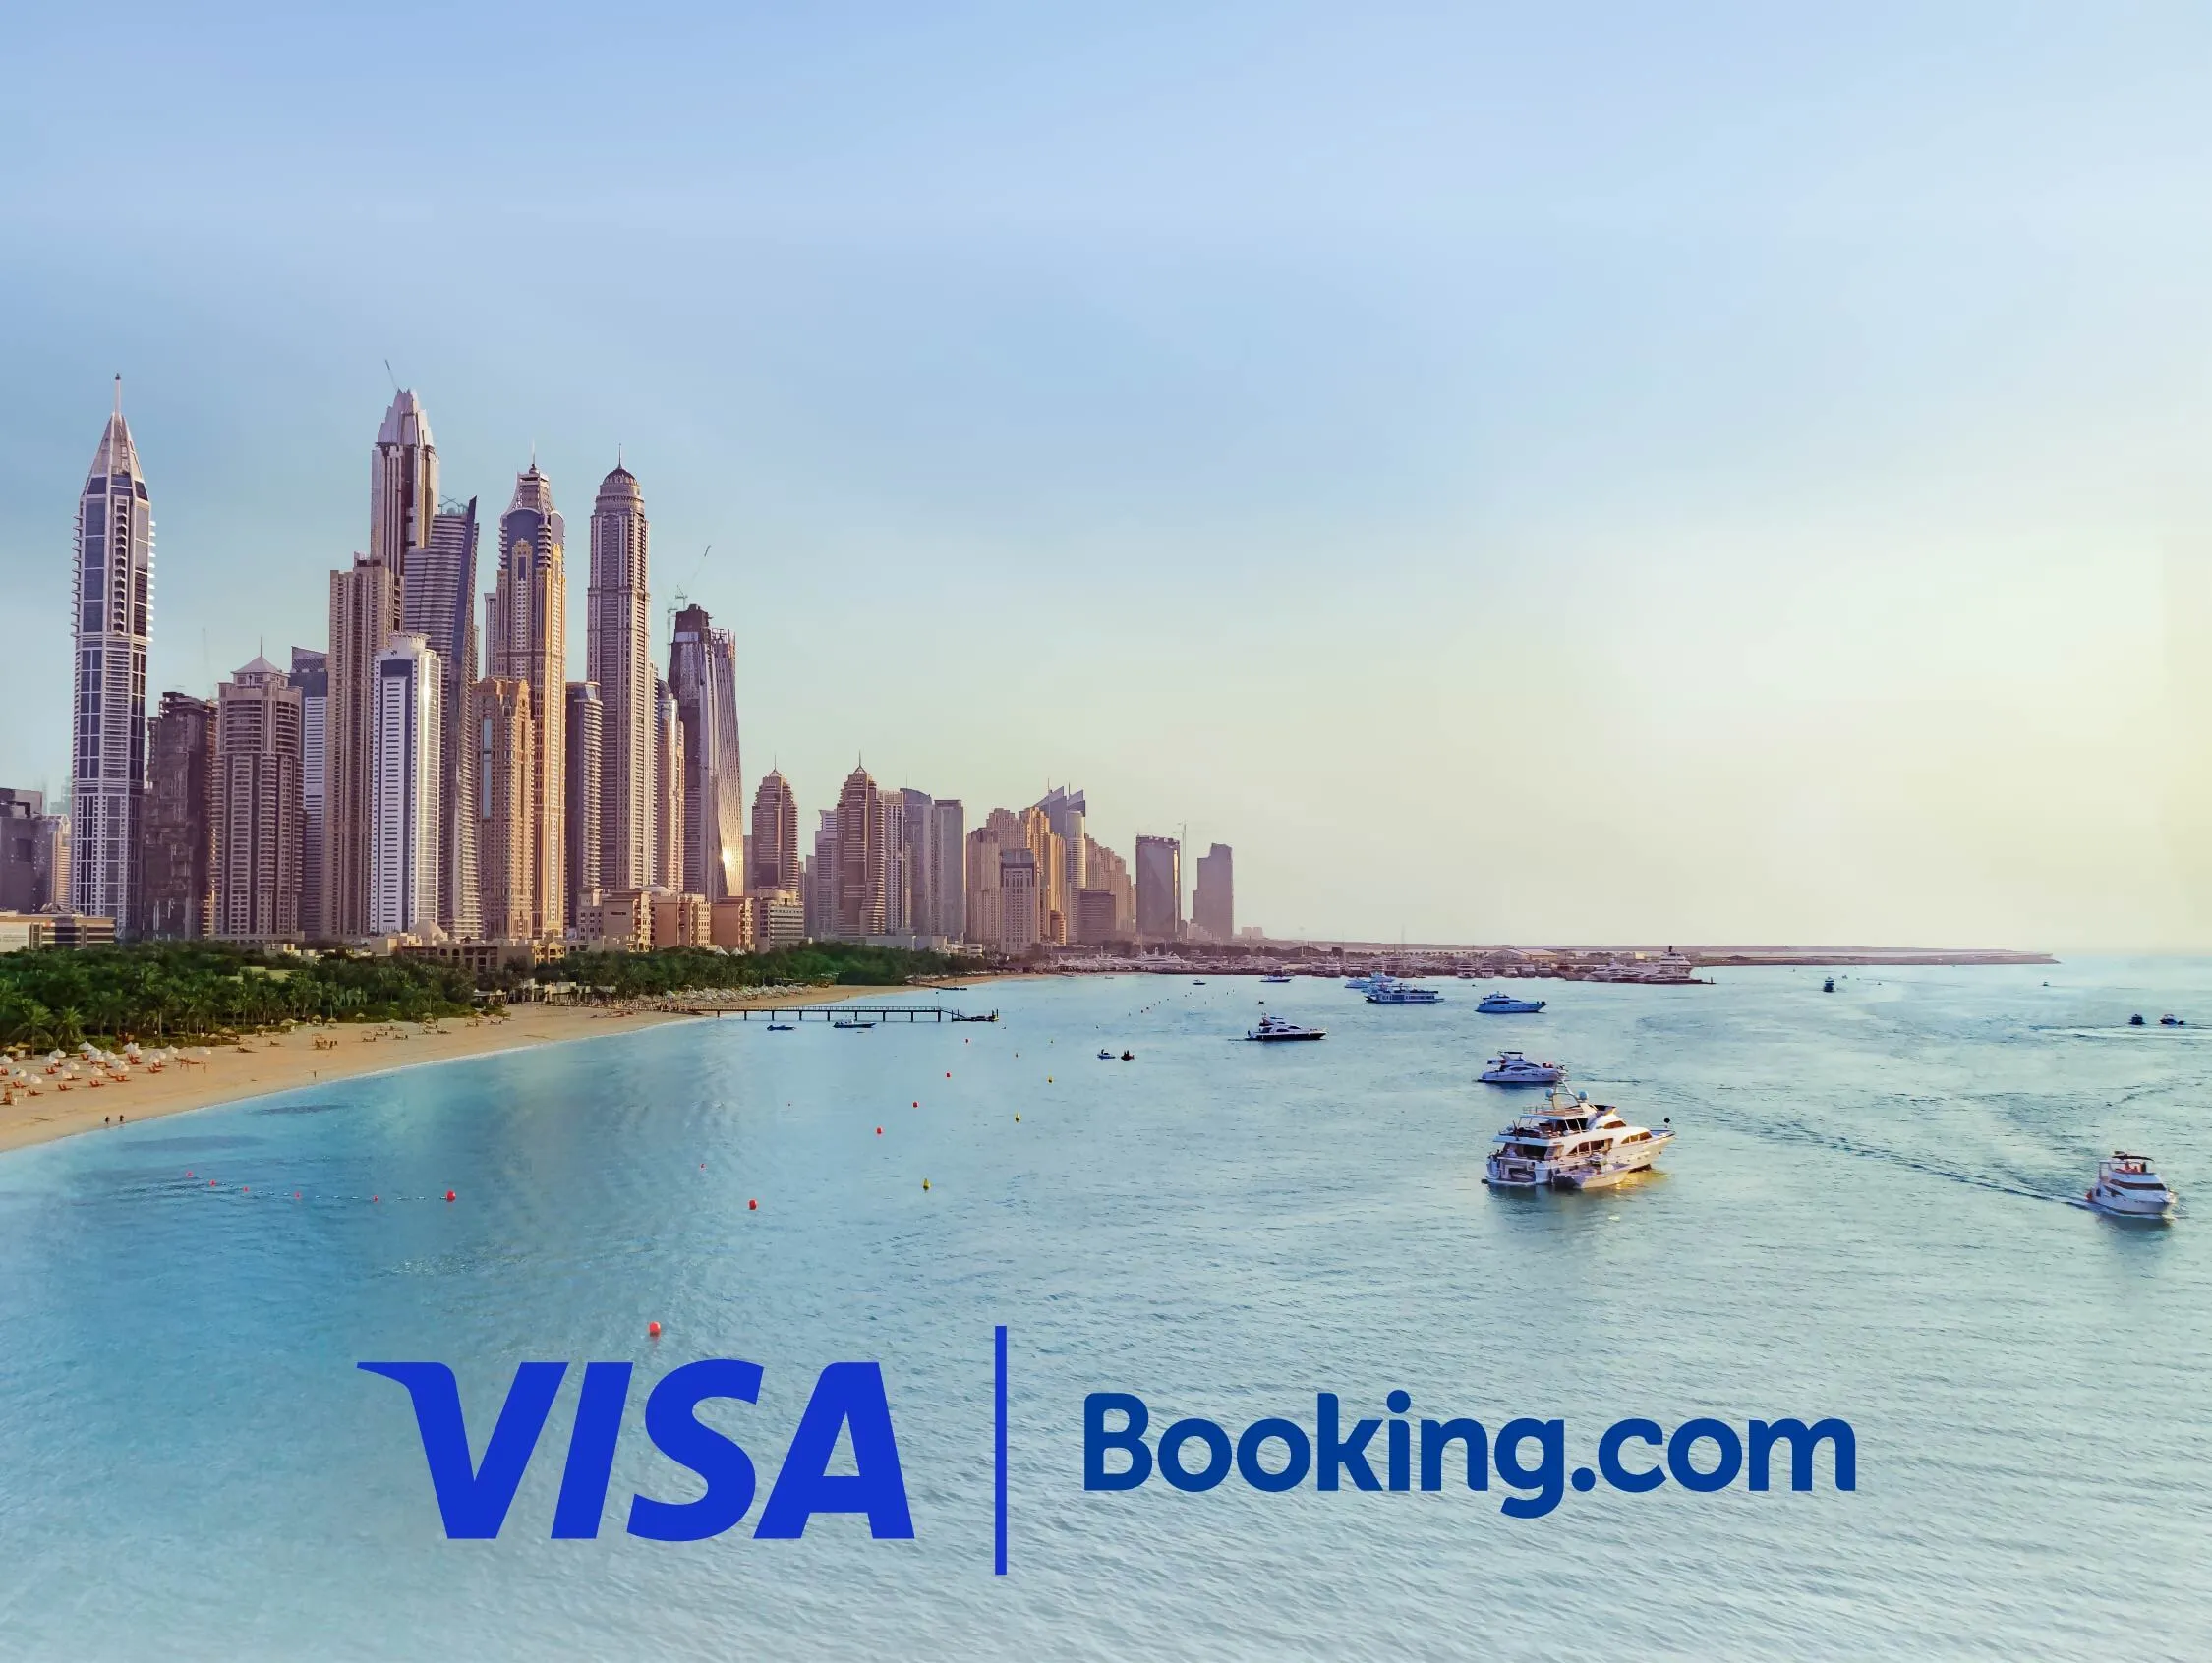 Visa Booking _540x406